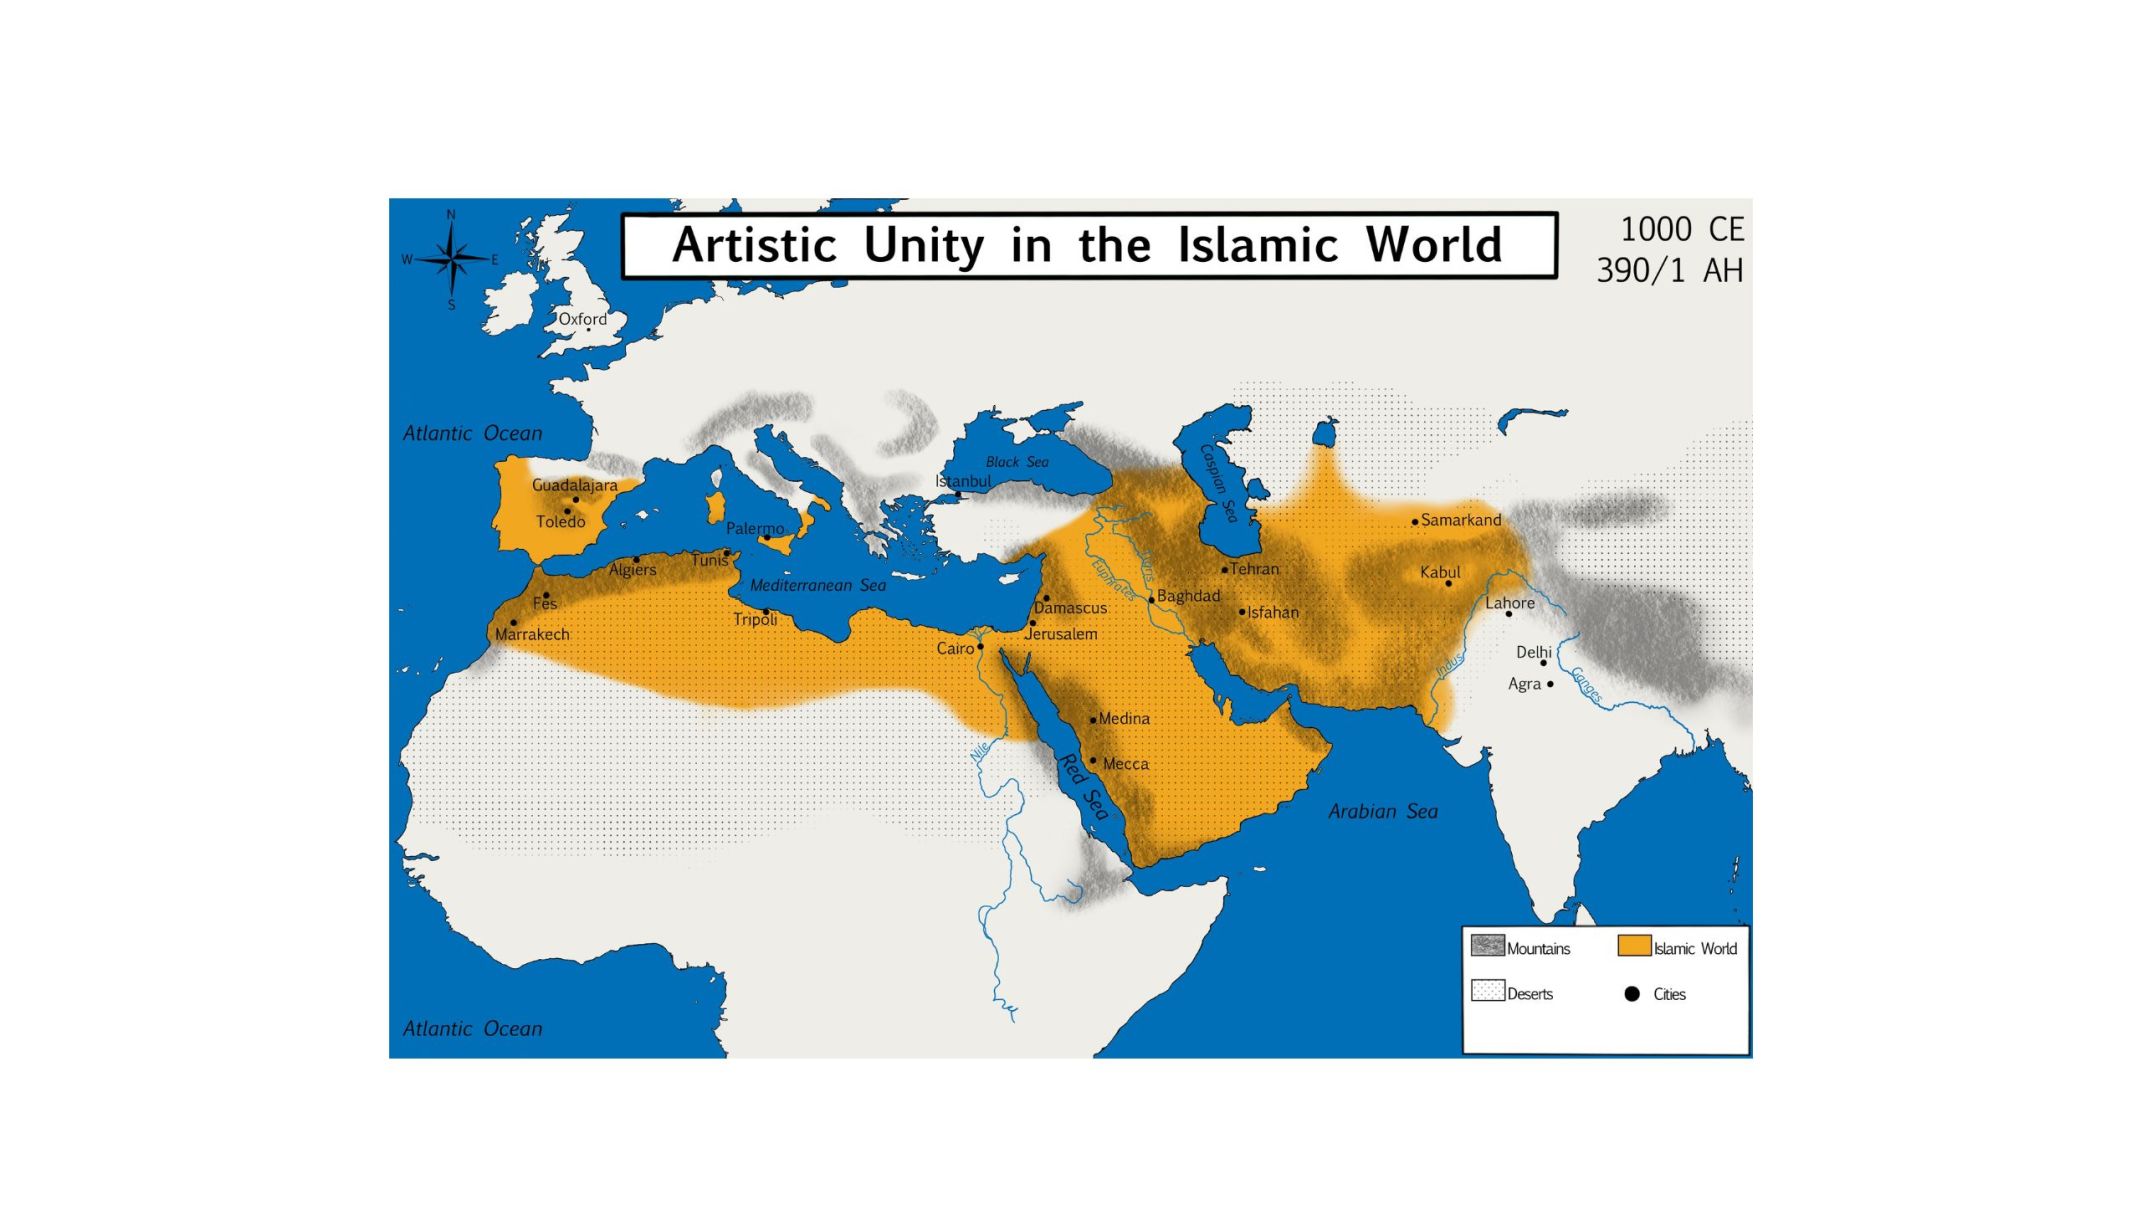 Maps Science In The Islamic World M3 Art Unity 2560 X 1440 Px 2142x1205 